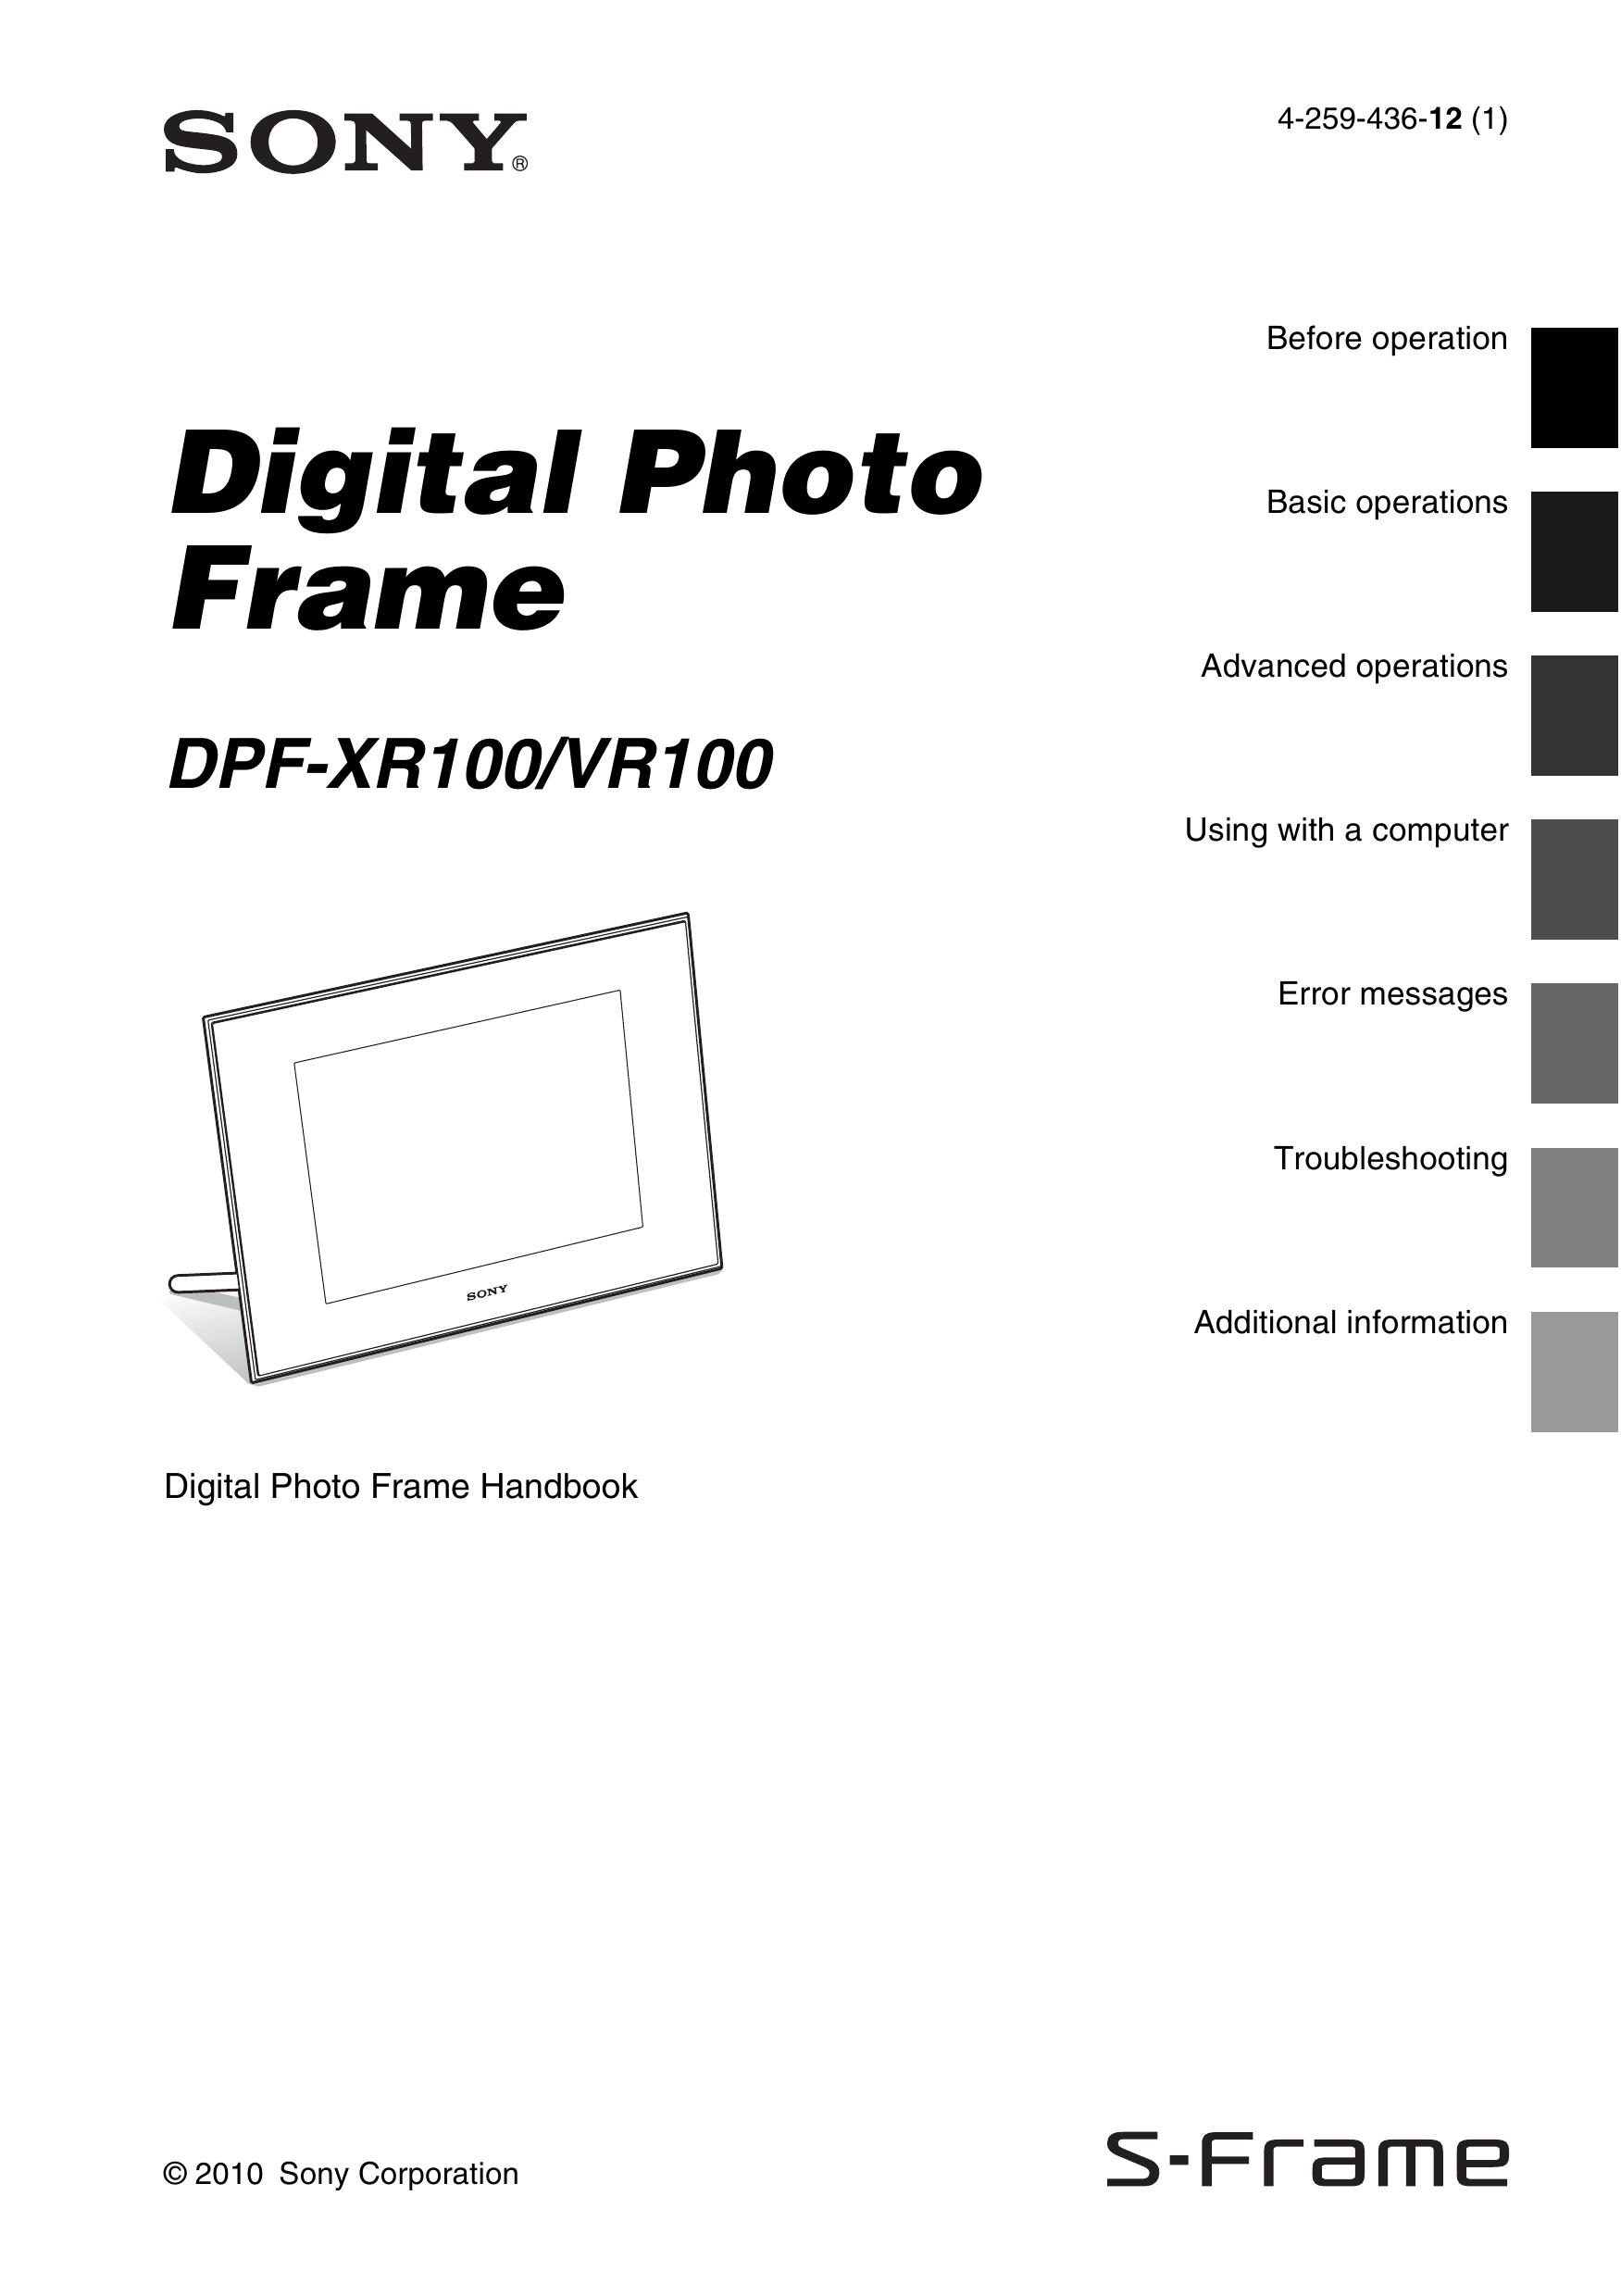 Sony 4-259-436-12 (1) Digital Photo Frame User Manual